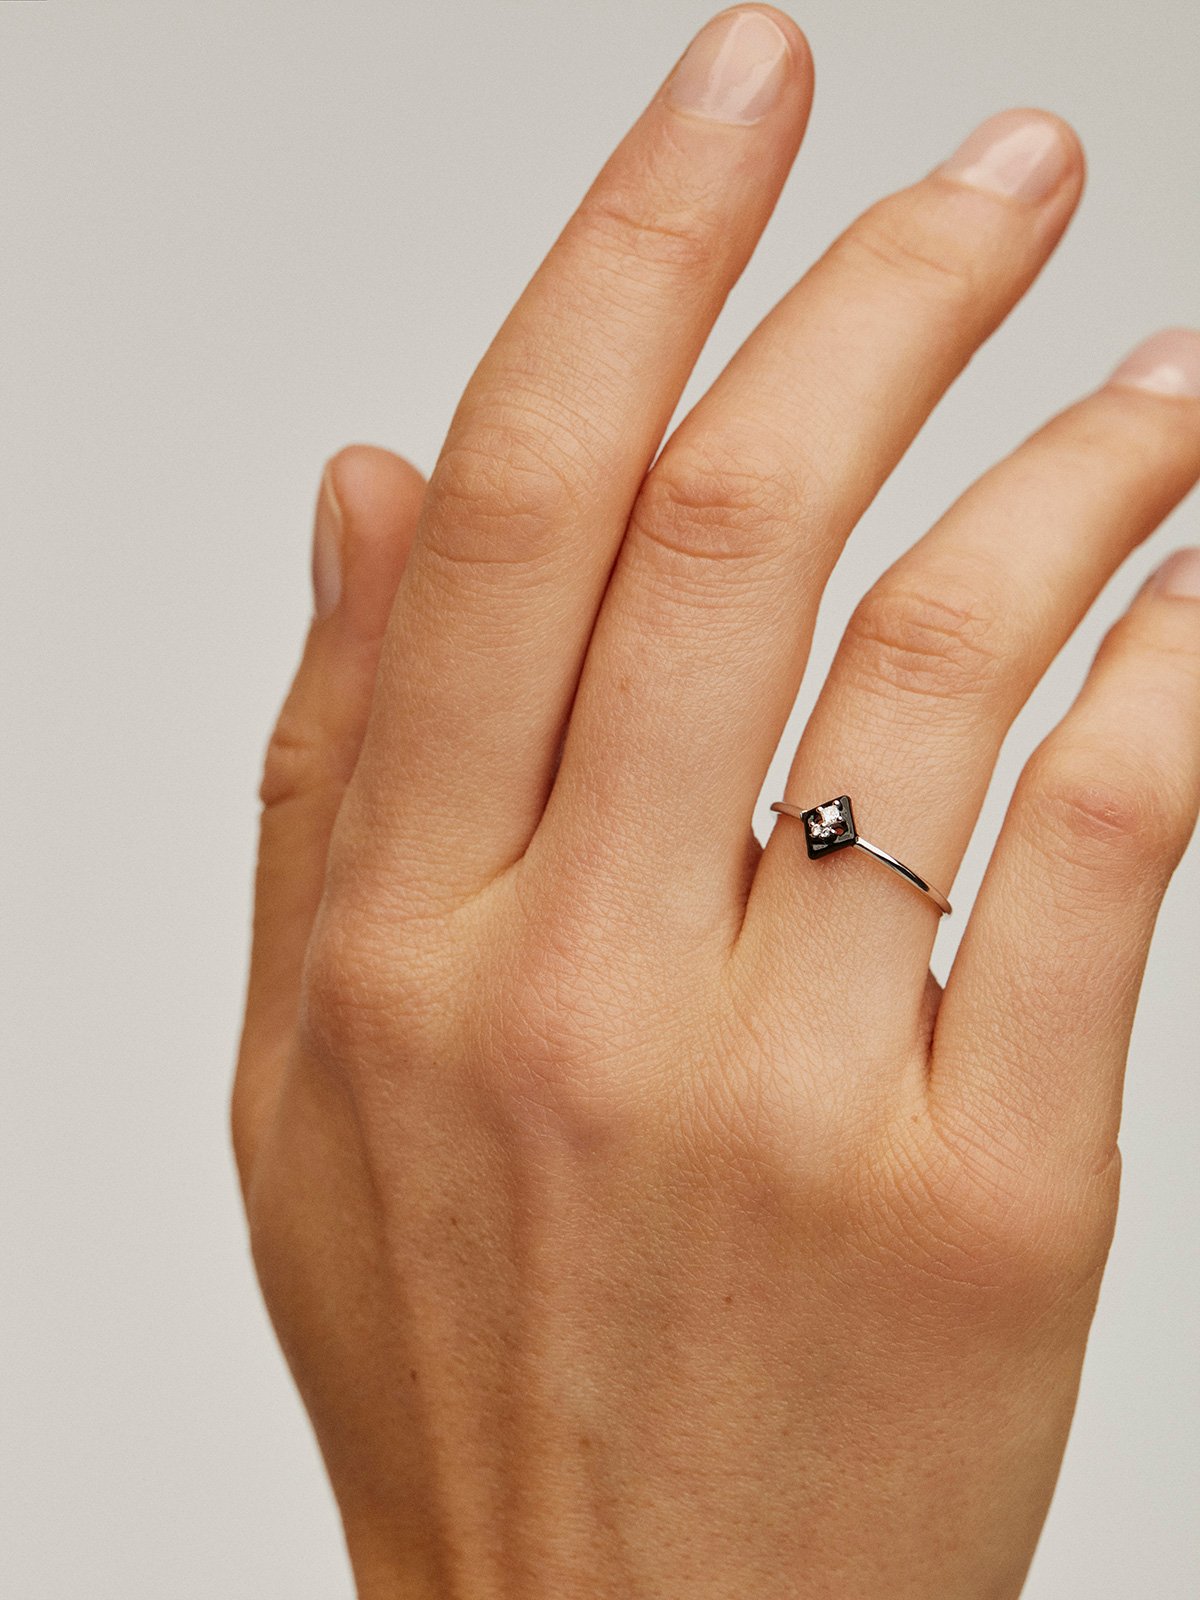 18K white gold ring with diamonds and black enamel.